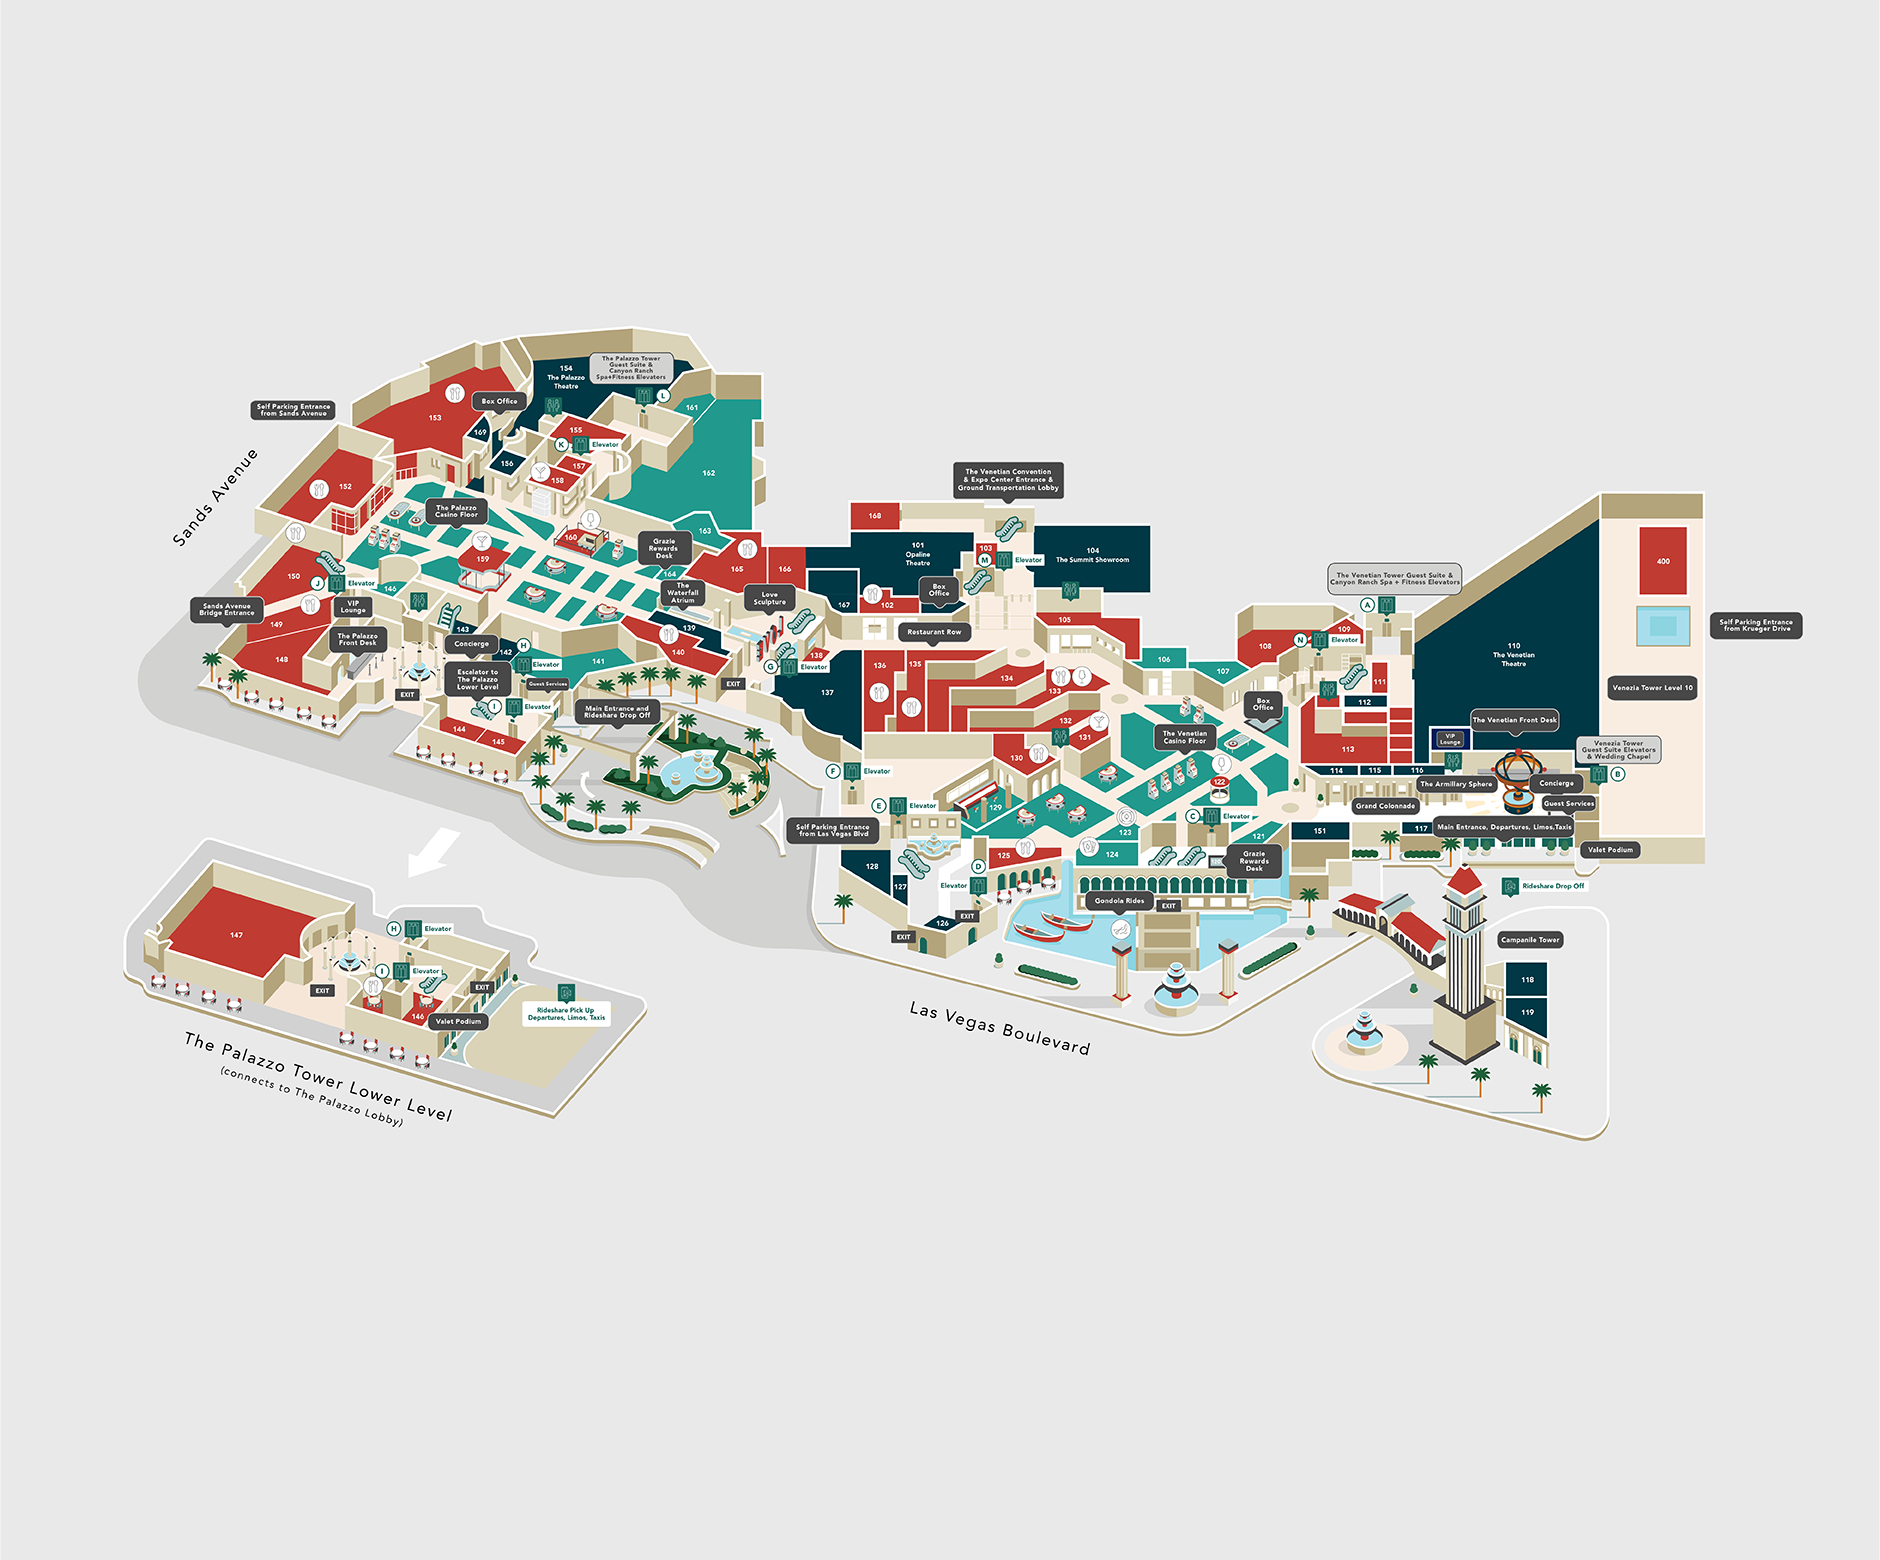 Mandalay Bay Casino Property Map & Floor Plans - Las Vegas